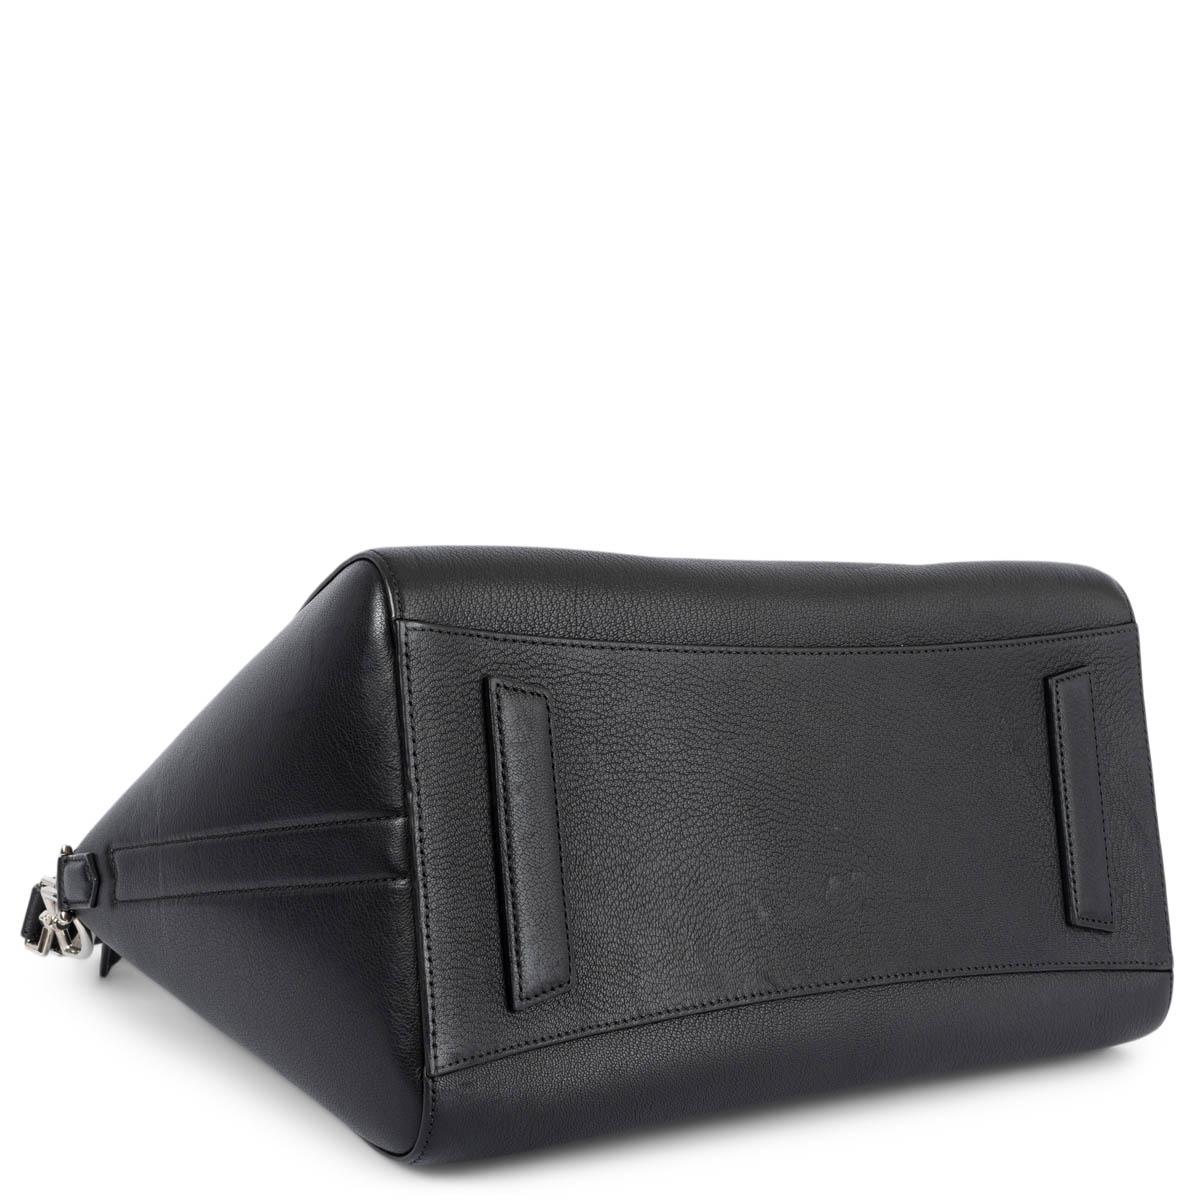 Women's GIVENCHY black leather ANTIGONA MEDIUM Tote Bag For Sale